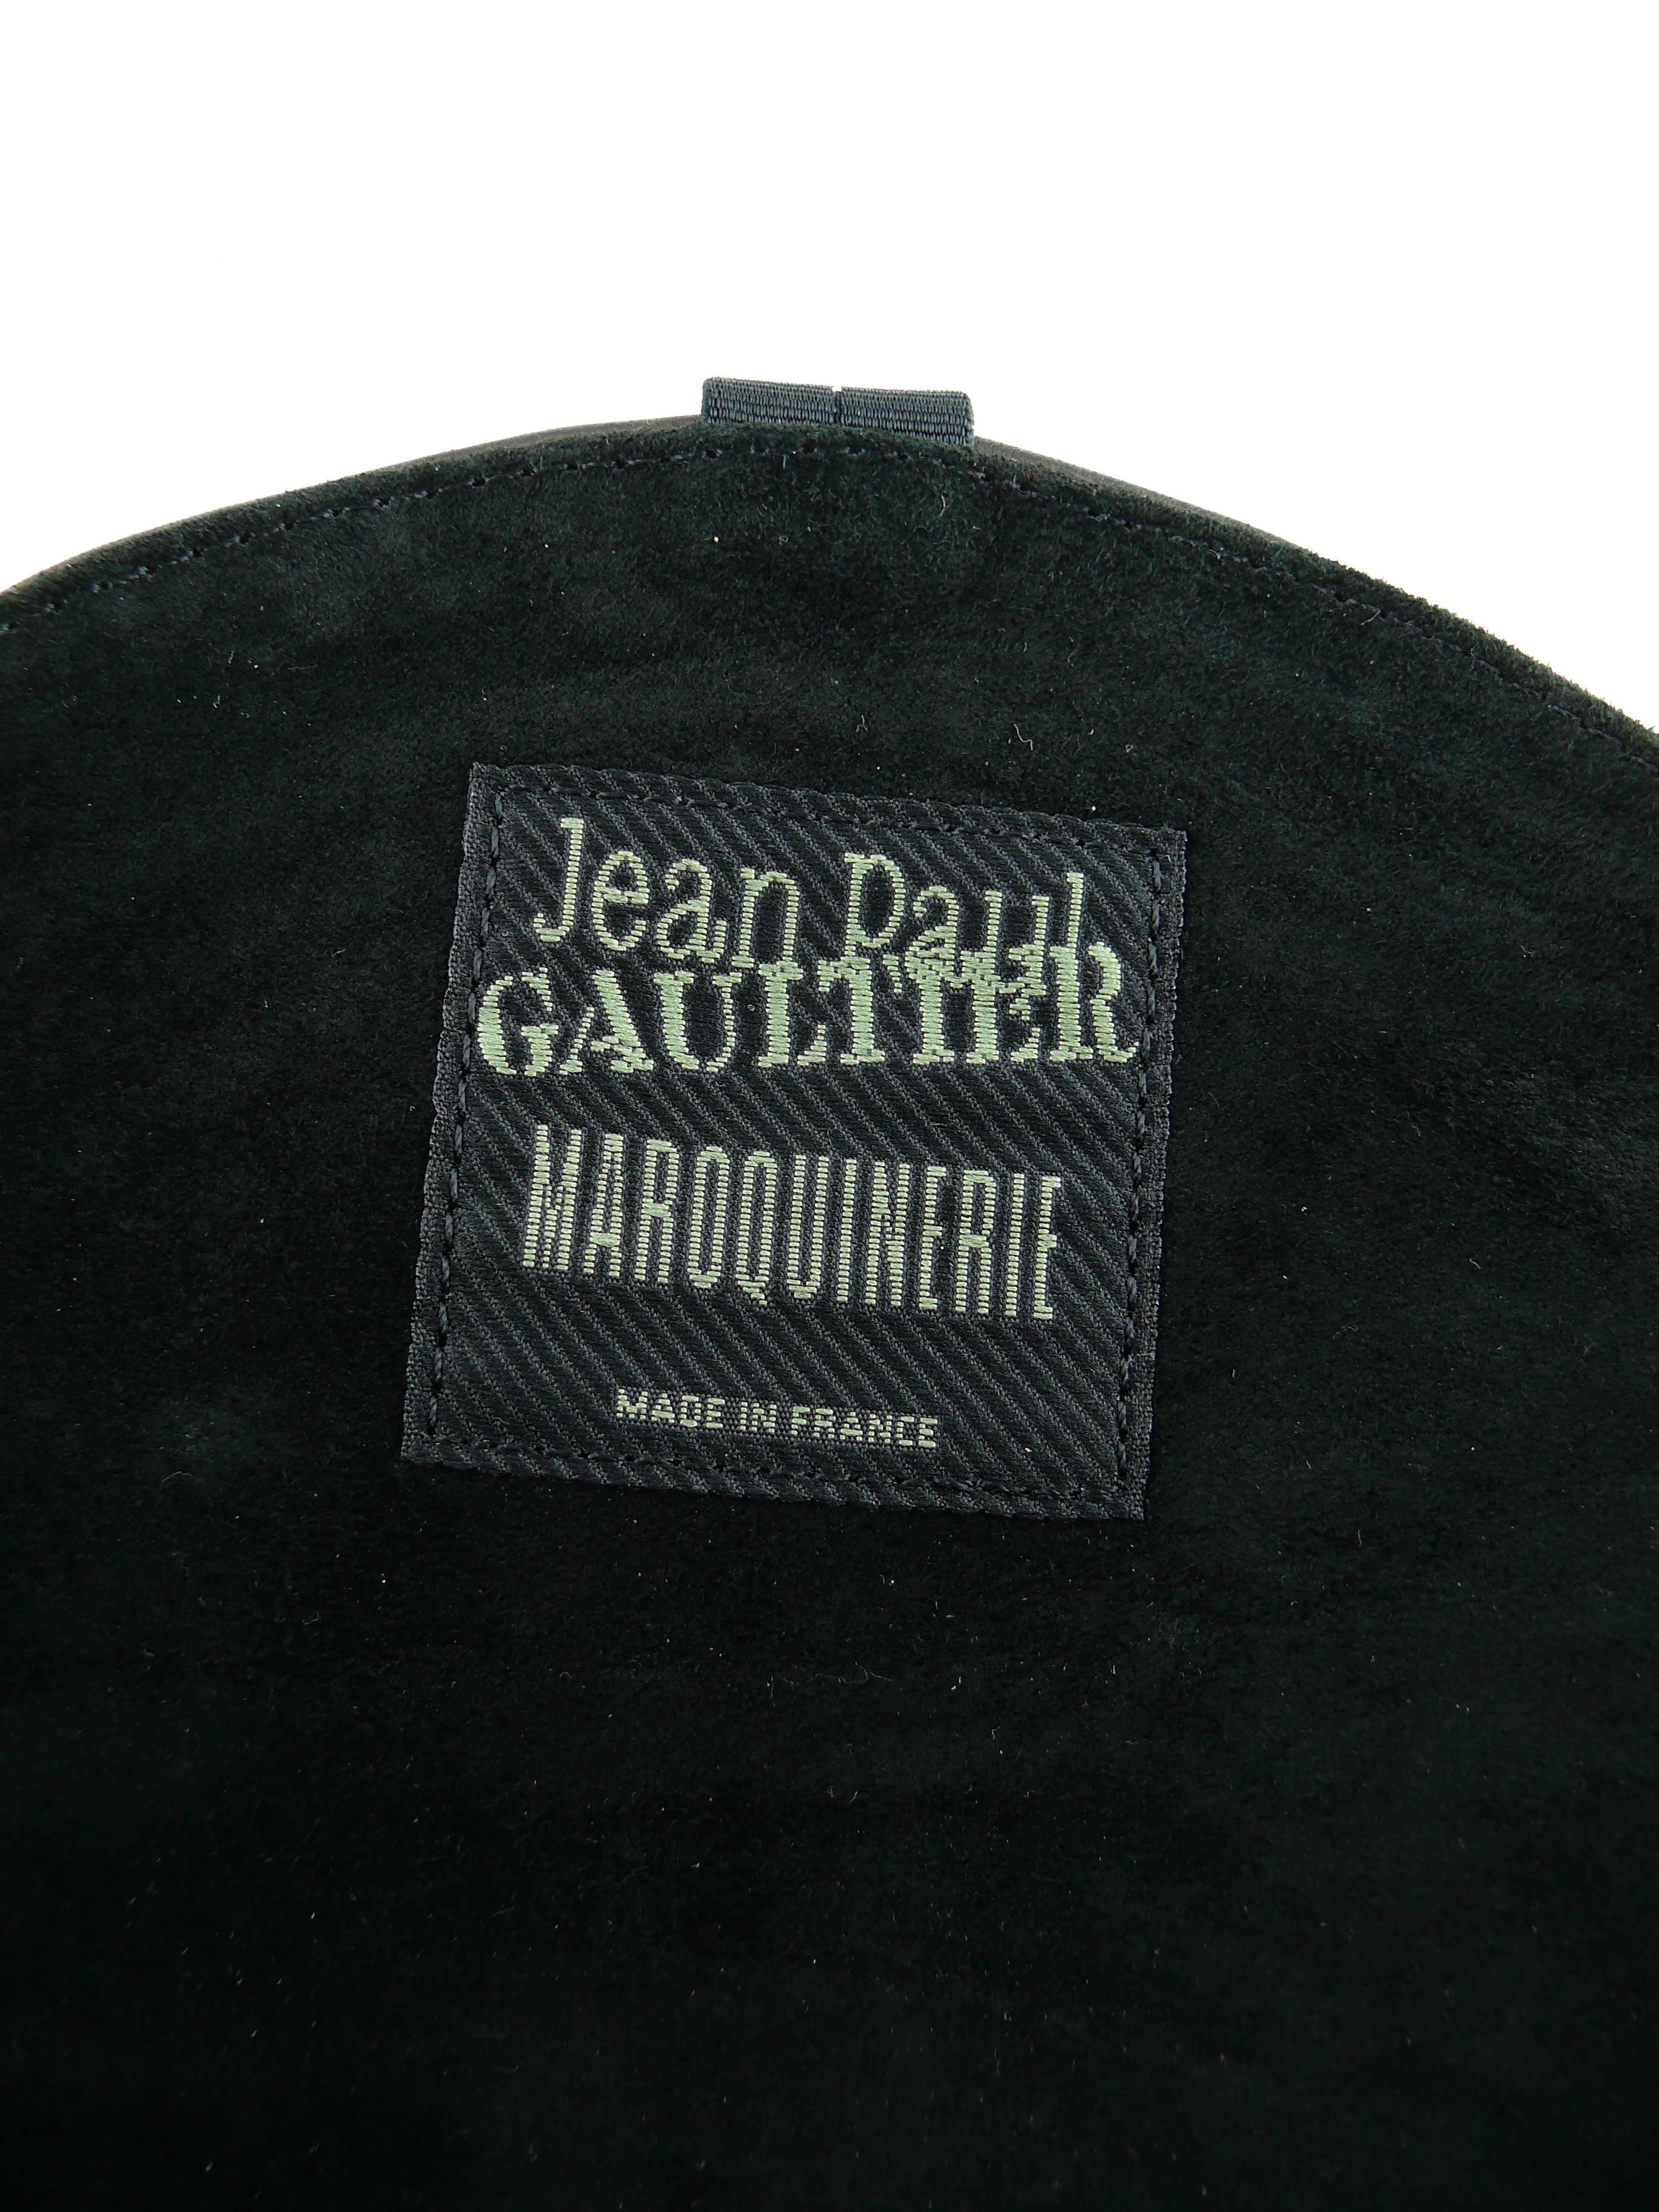 Jean Paul Gaultier Vintage Black Lambskin Corset Bag Clutch For Sale 2